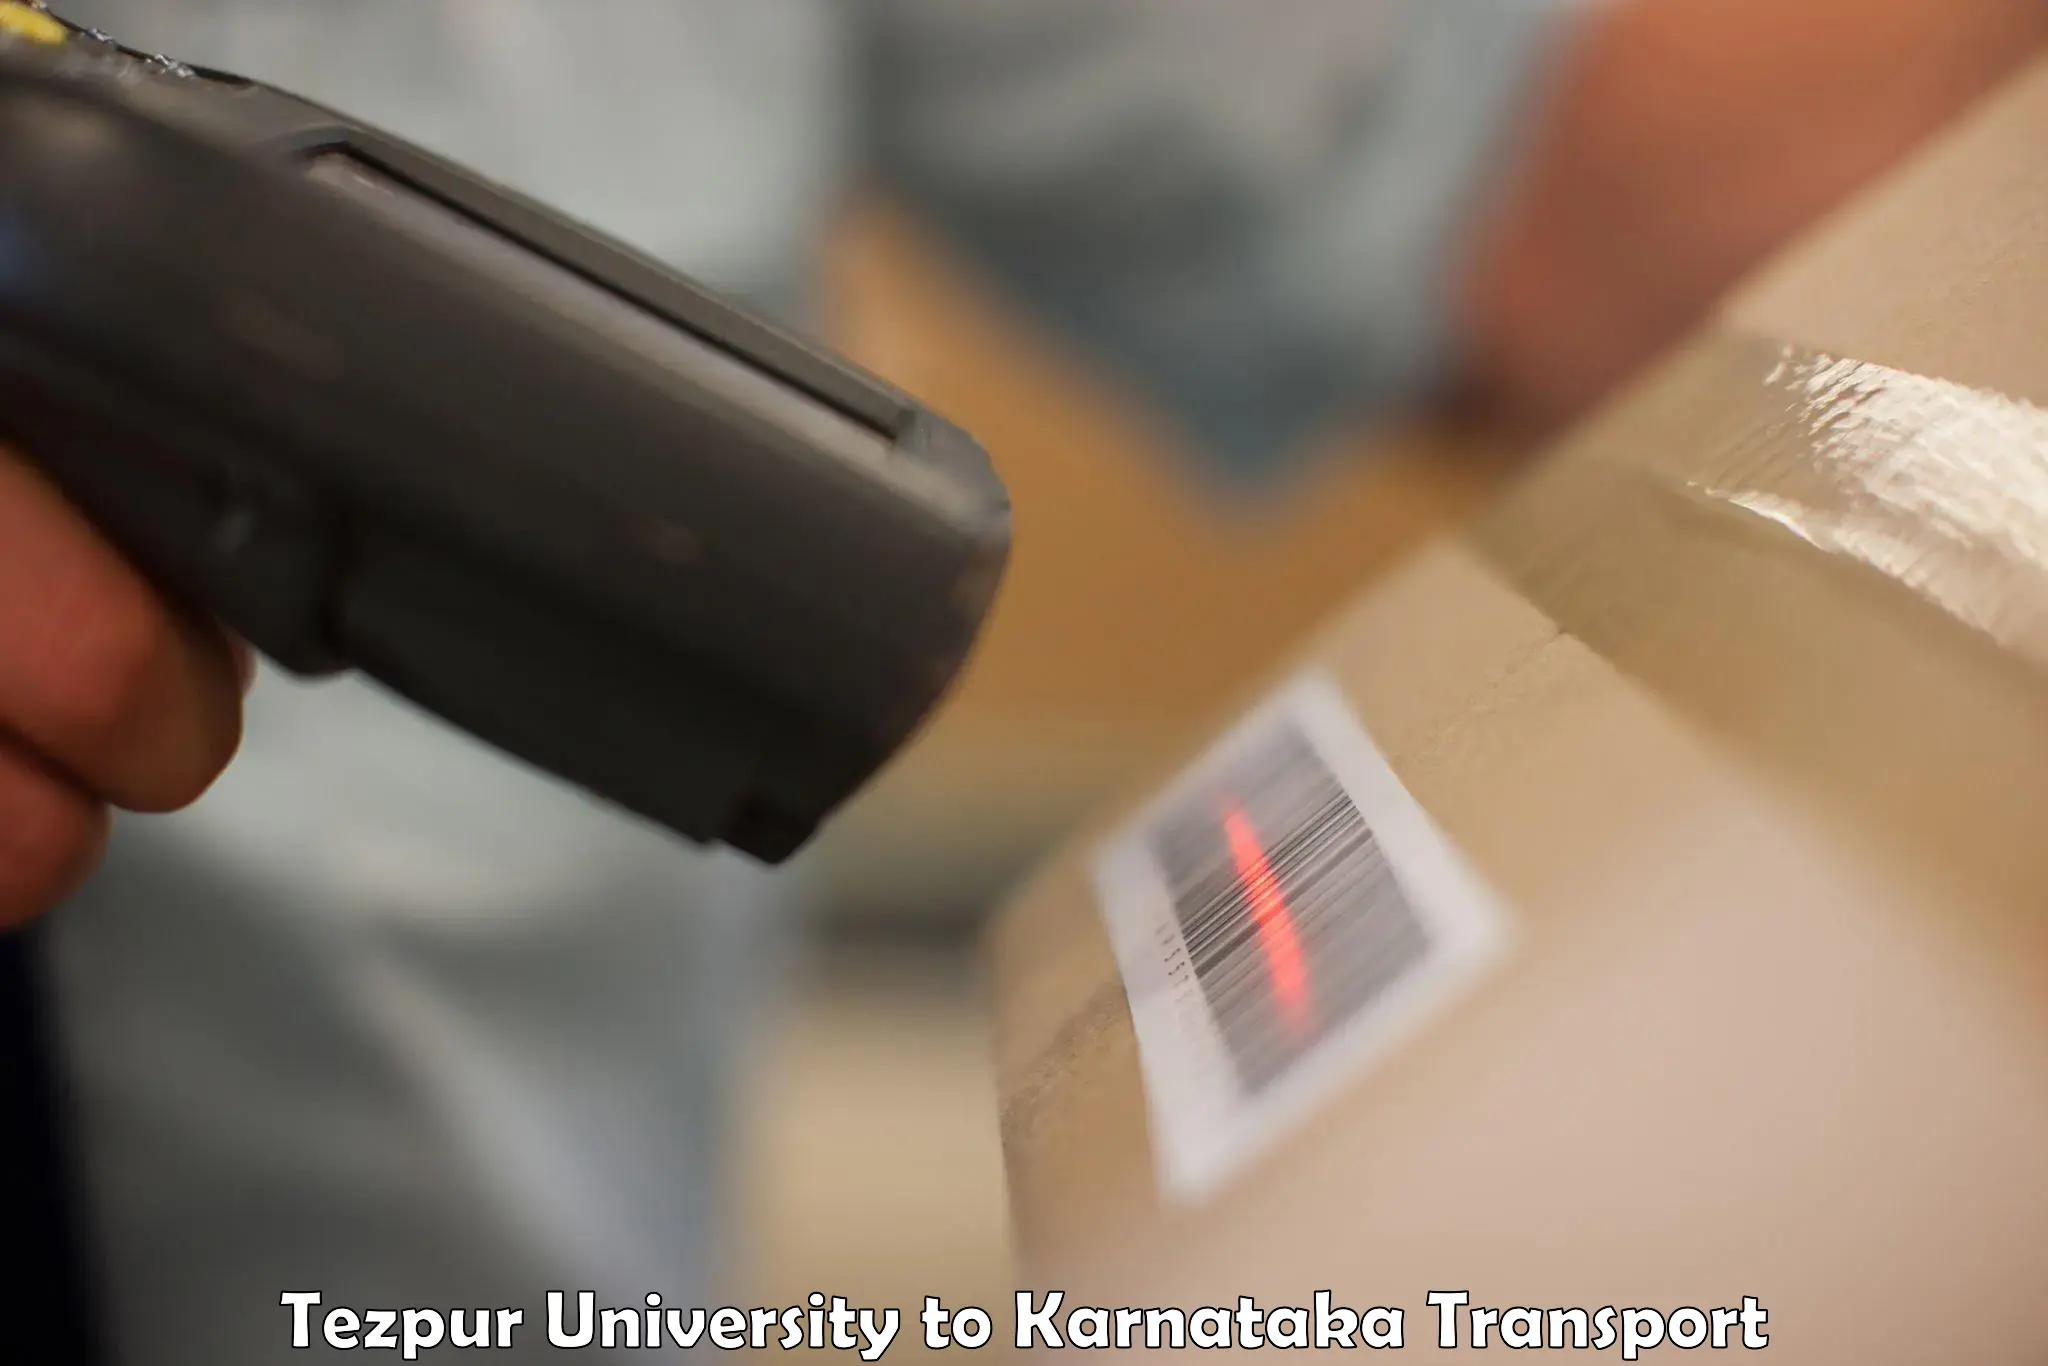 Daily parcel service transport Tezpur University to Karnataka